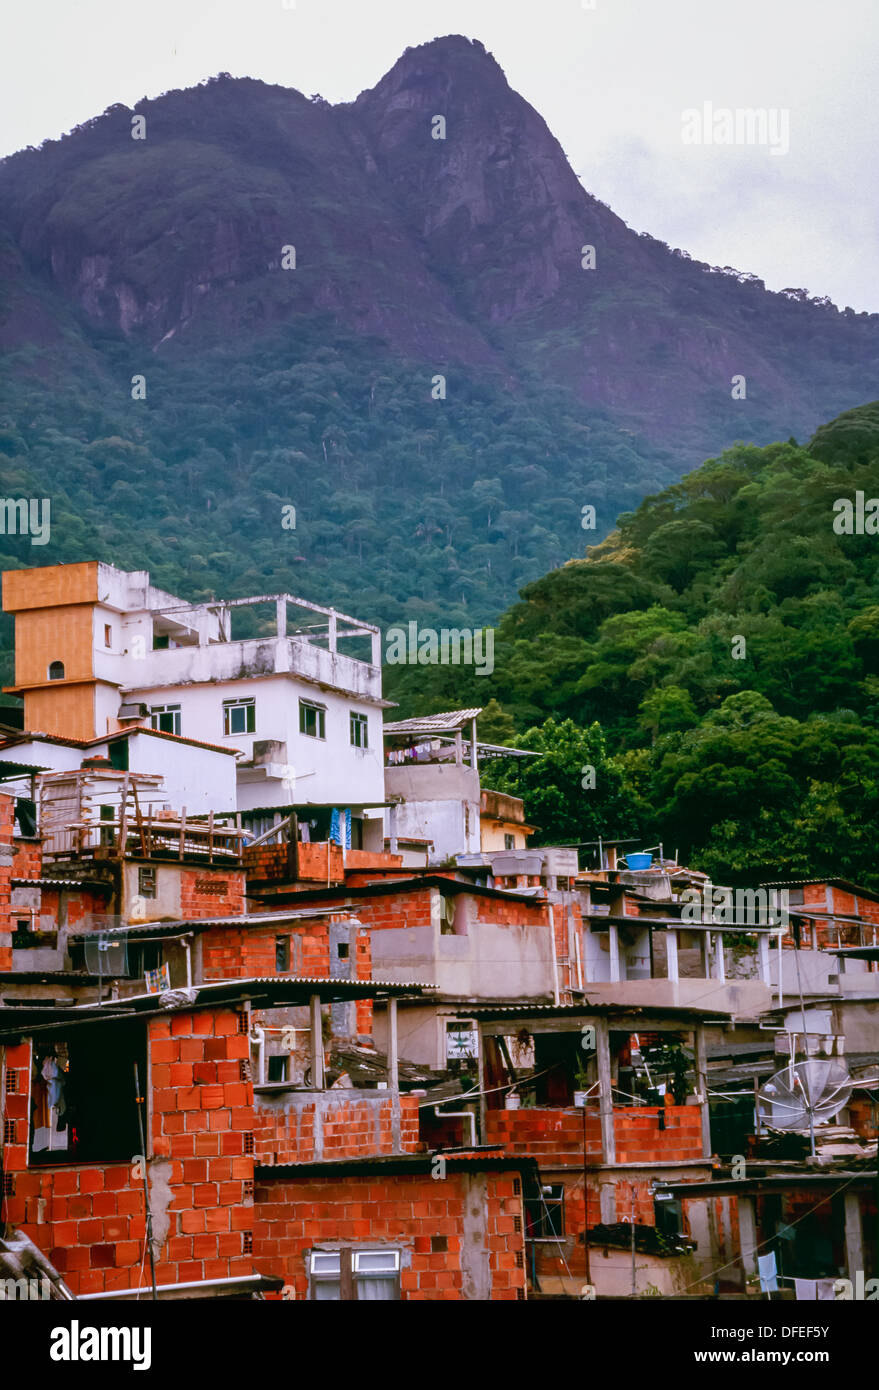 Favelas, slum dwellings on hills of the city of Rio de Janeiro, Brazil where poor people live Stock Photo